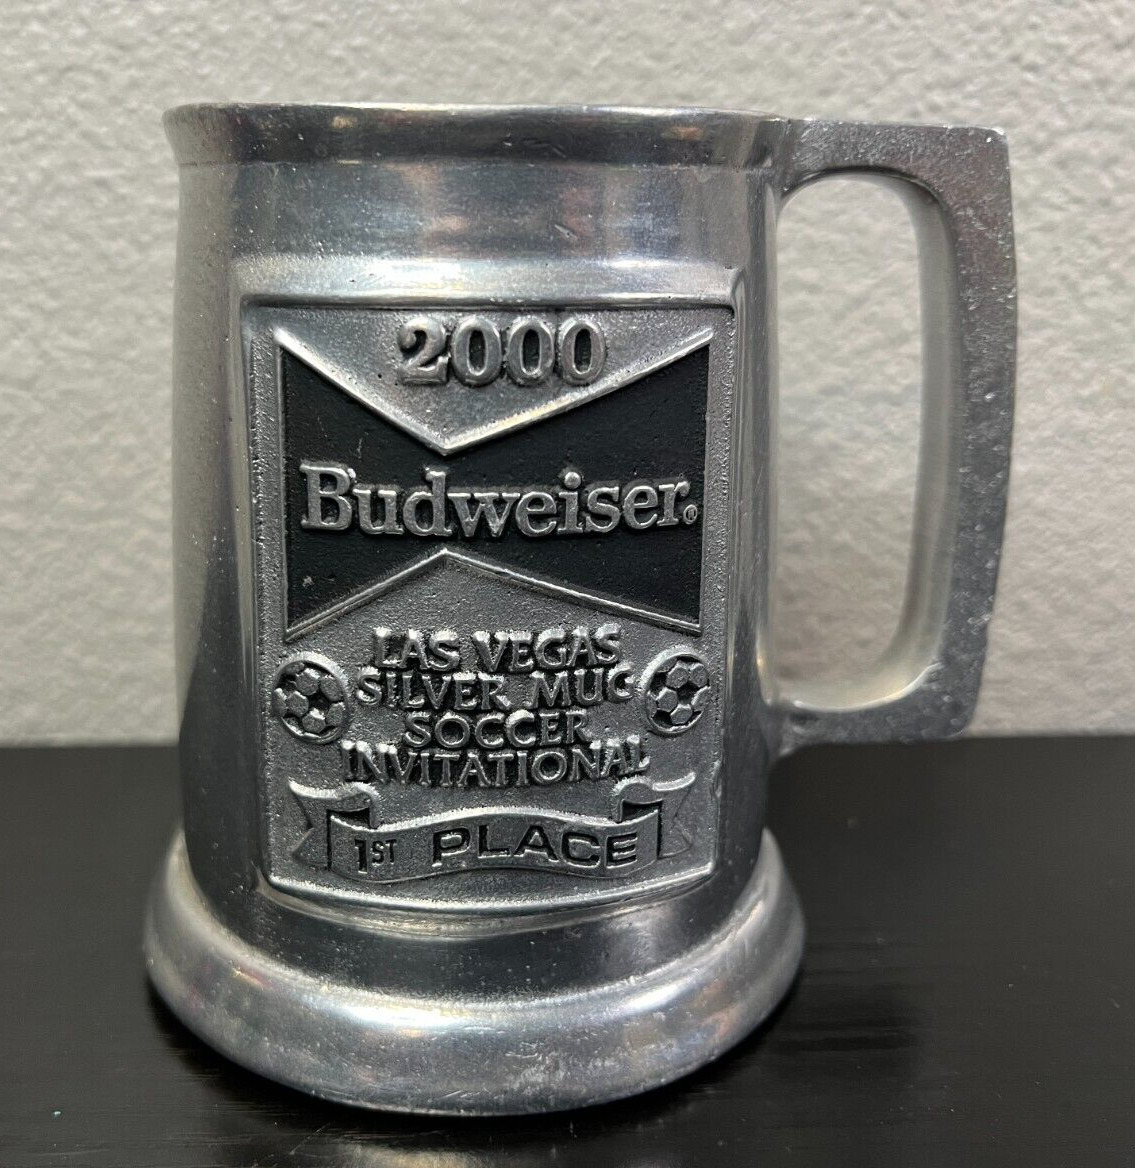 Budweiser 2000 Las Vegas Silver Mug Soccer Invitational 1st Place Pewter Stein